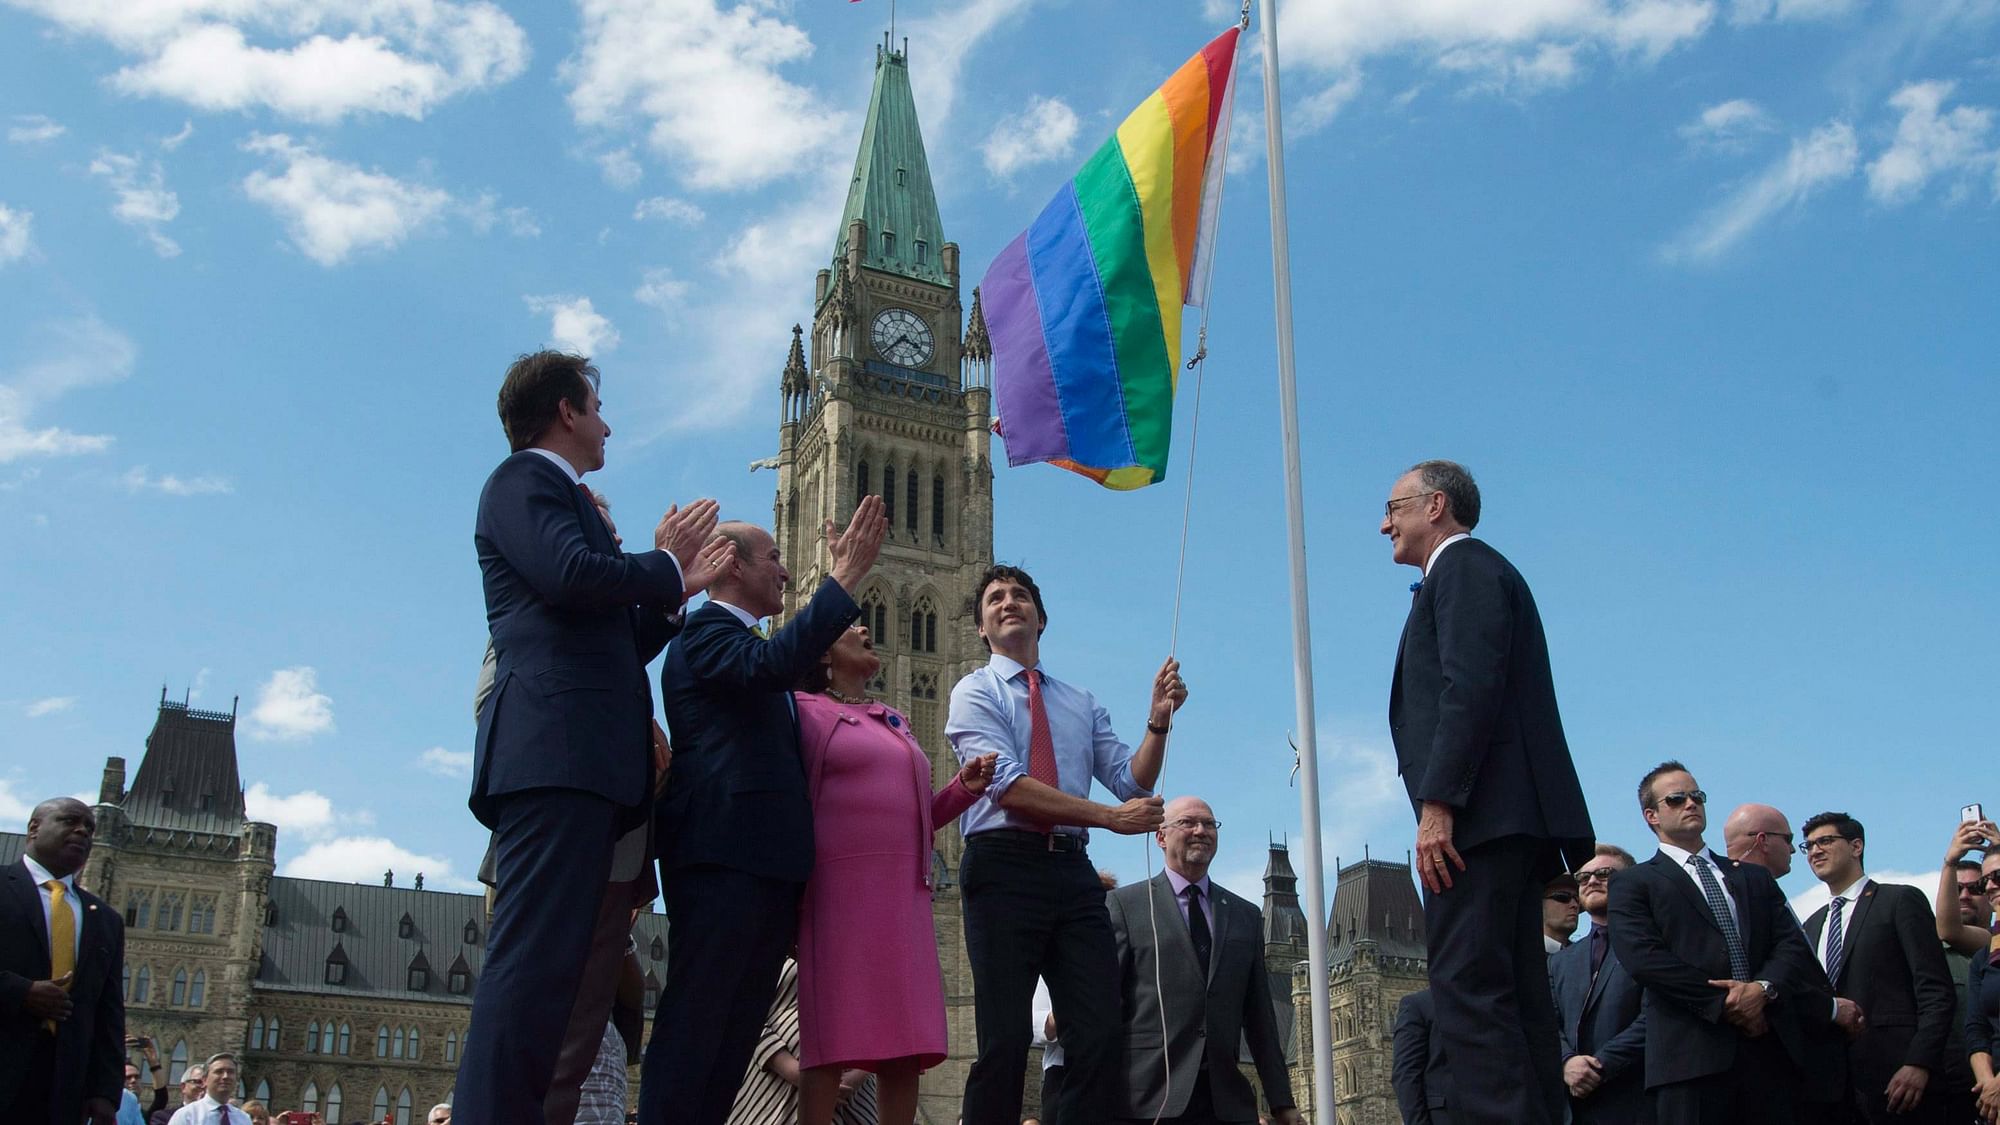 

Justin Trudea hoists the Pride flag at Parliament Hill, Ontario, Canada. (Photo: Reuters)